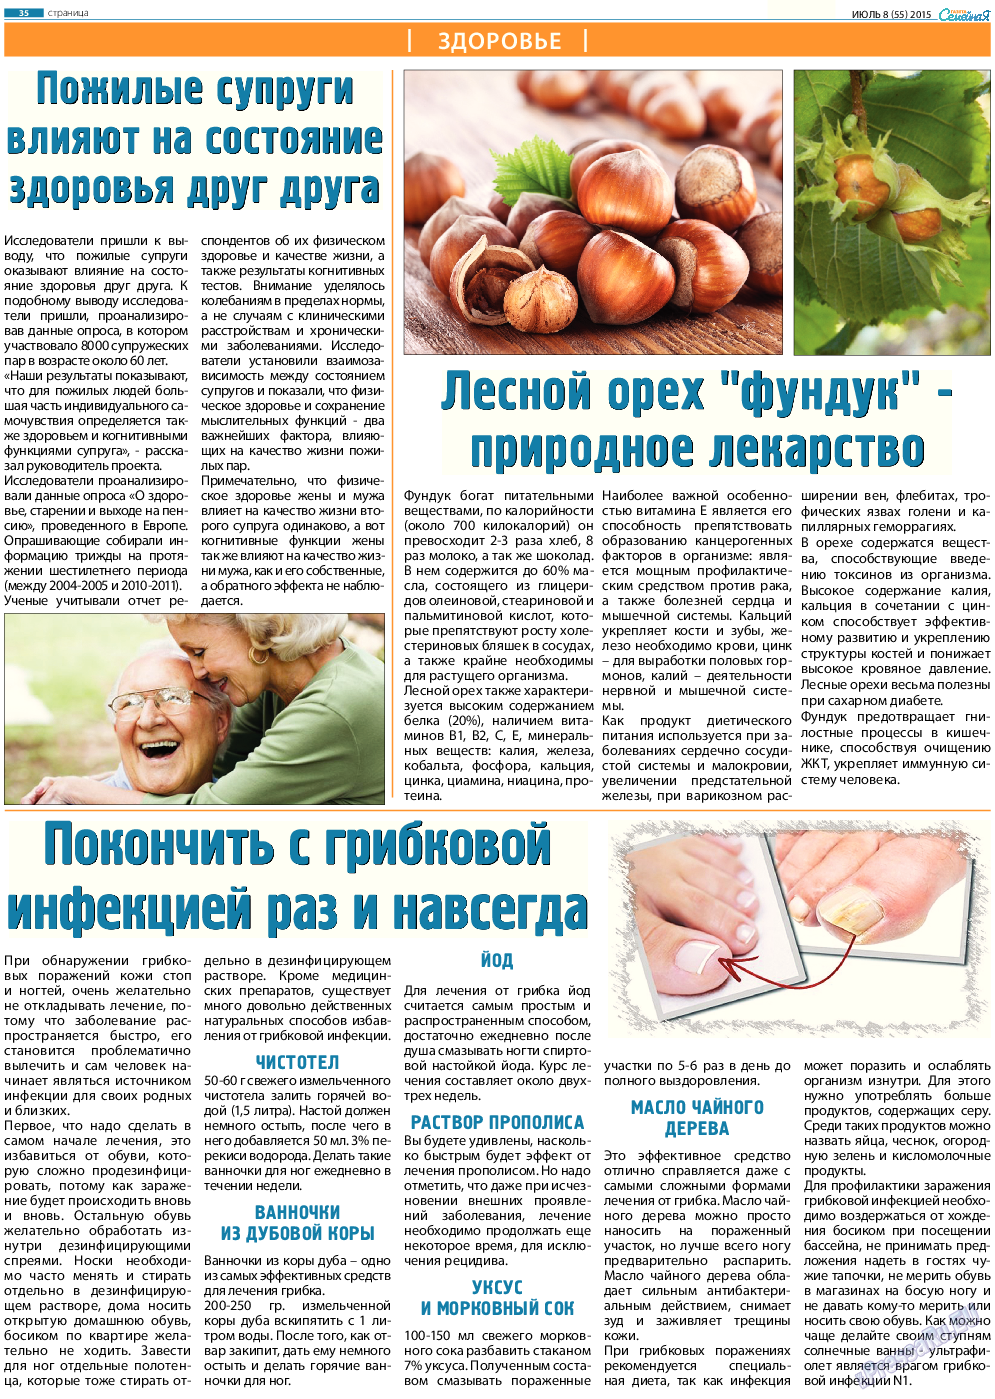 Семейная газета (газета). 2015 год, номер 8, стр. 35